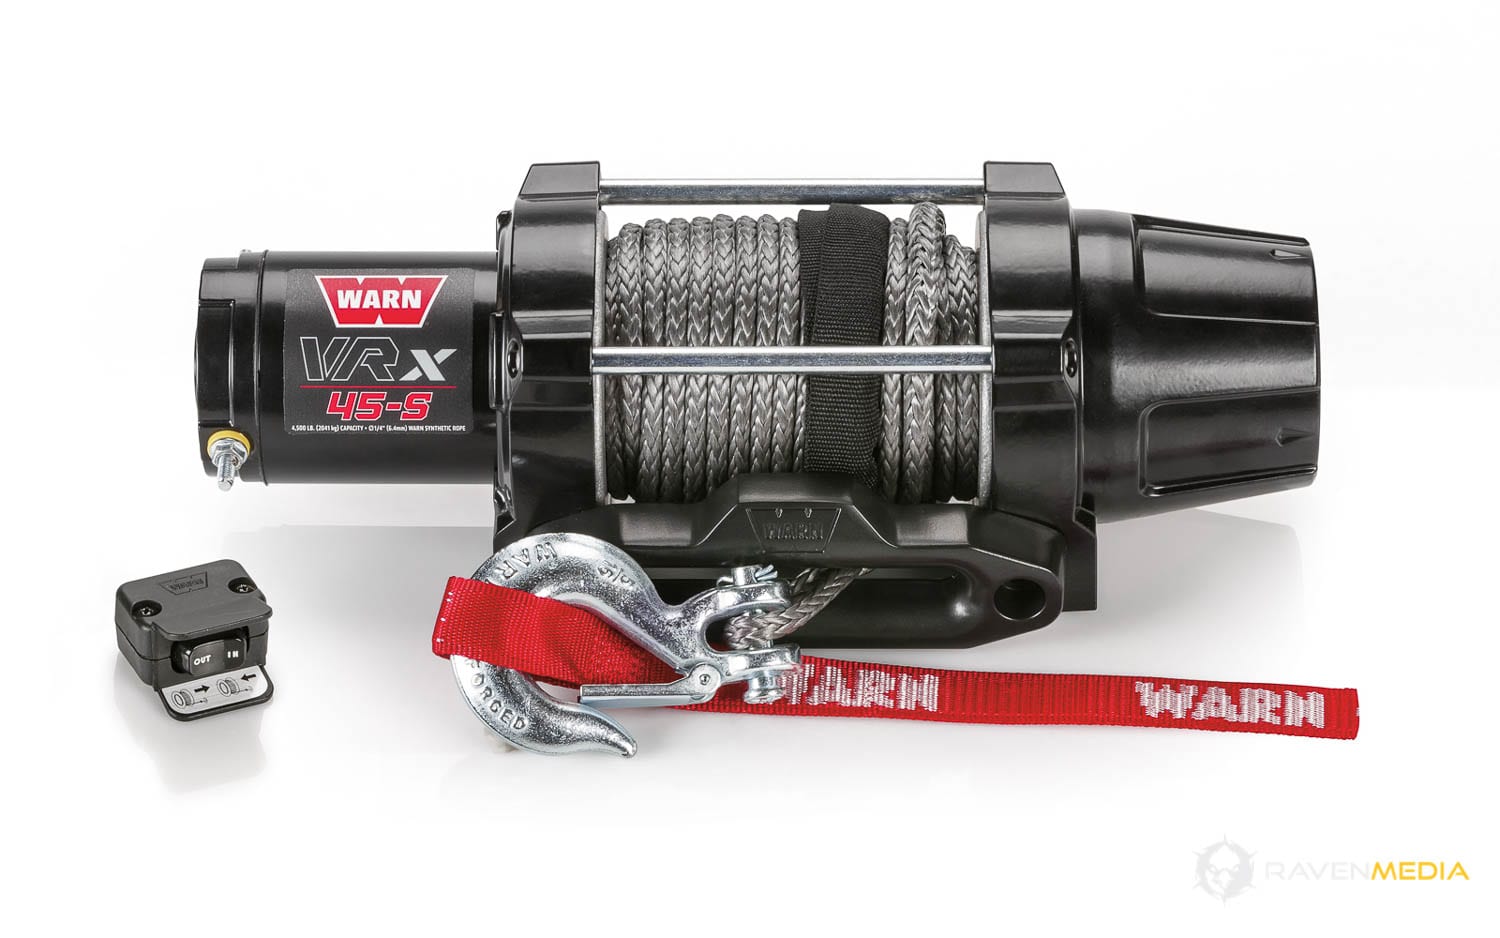 Warn Industries - VRX 45-S